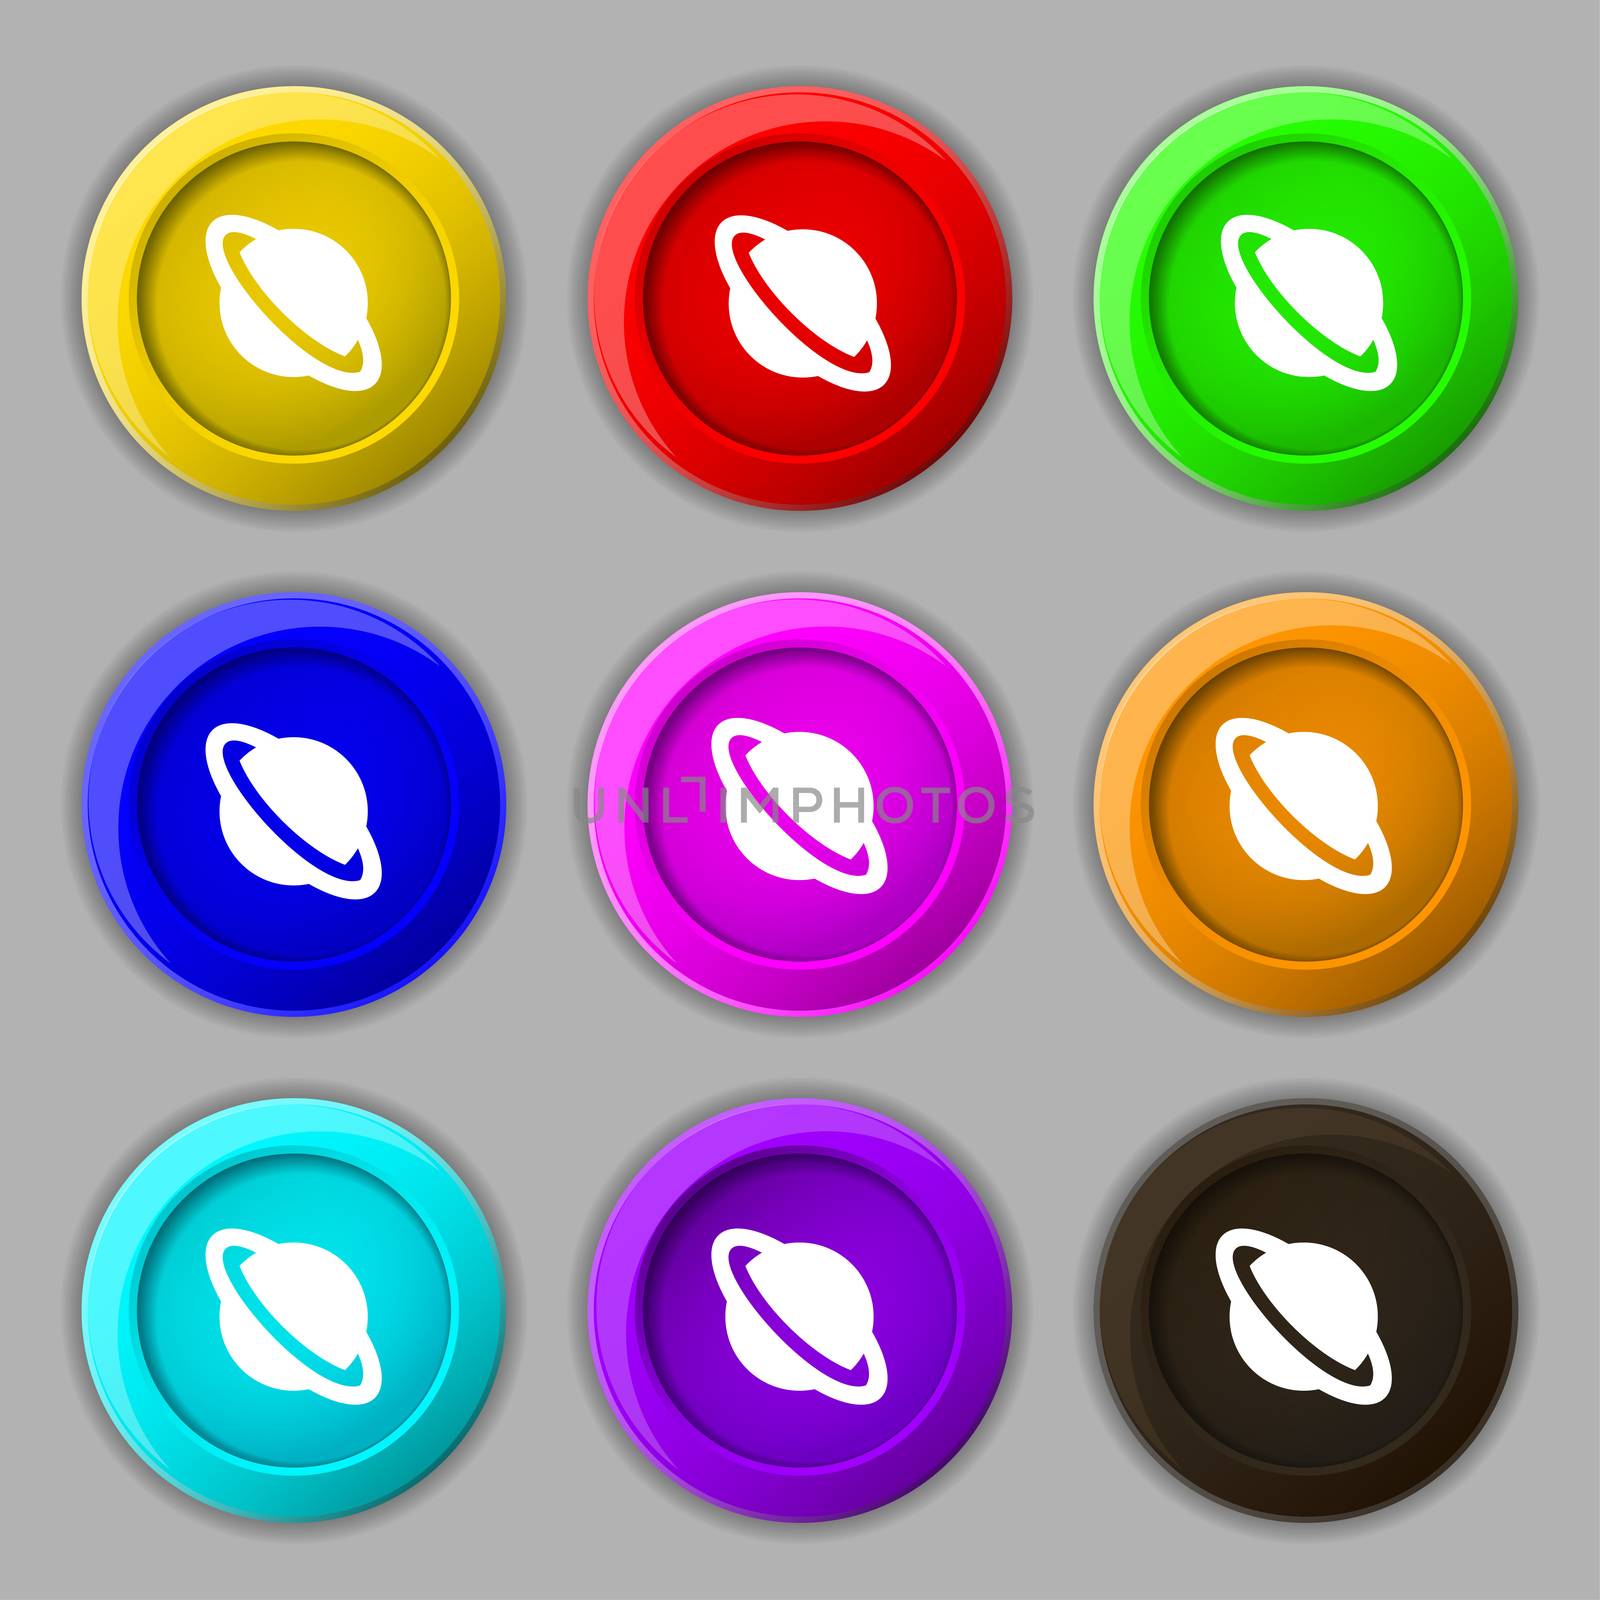 Jupiter planet icon sign. symbol on nine round colourful buttons. illustration